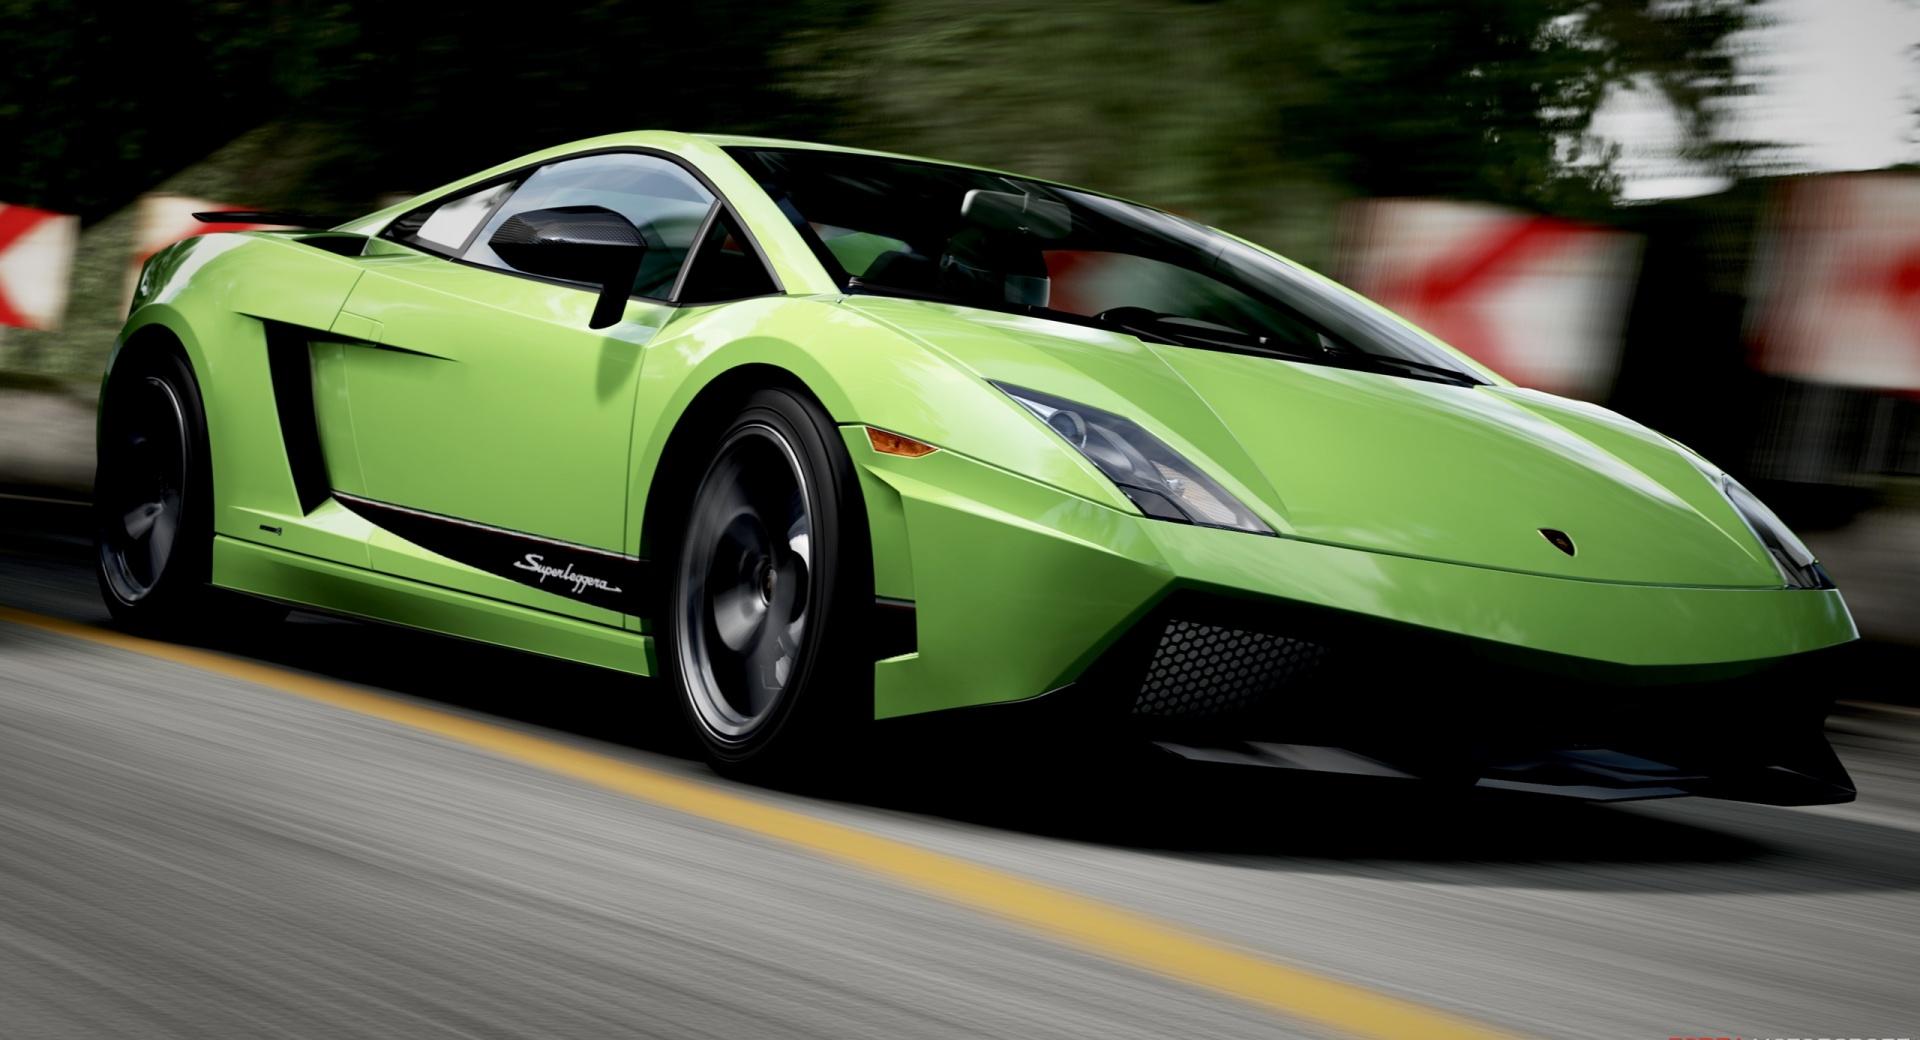 Lamborghini Gallardo in Forza Motorsport 4 at 640 x 960 iPhone 4 size wallpapers HD quality